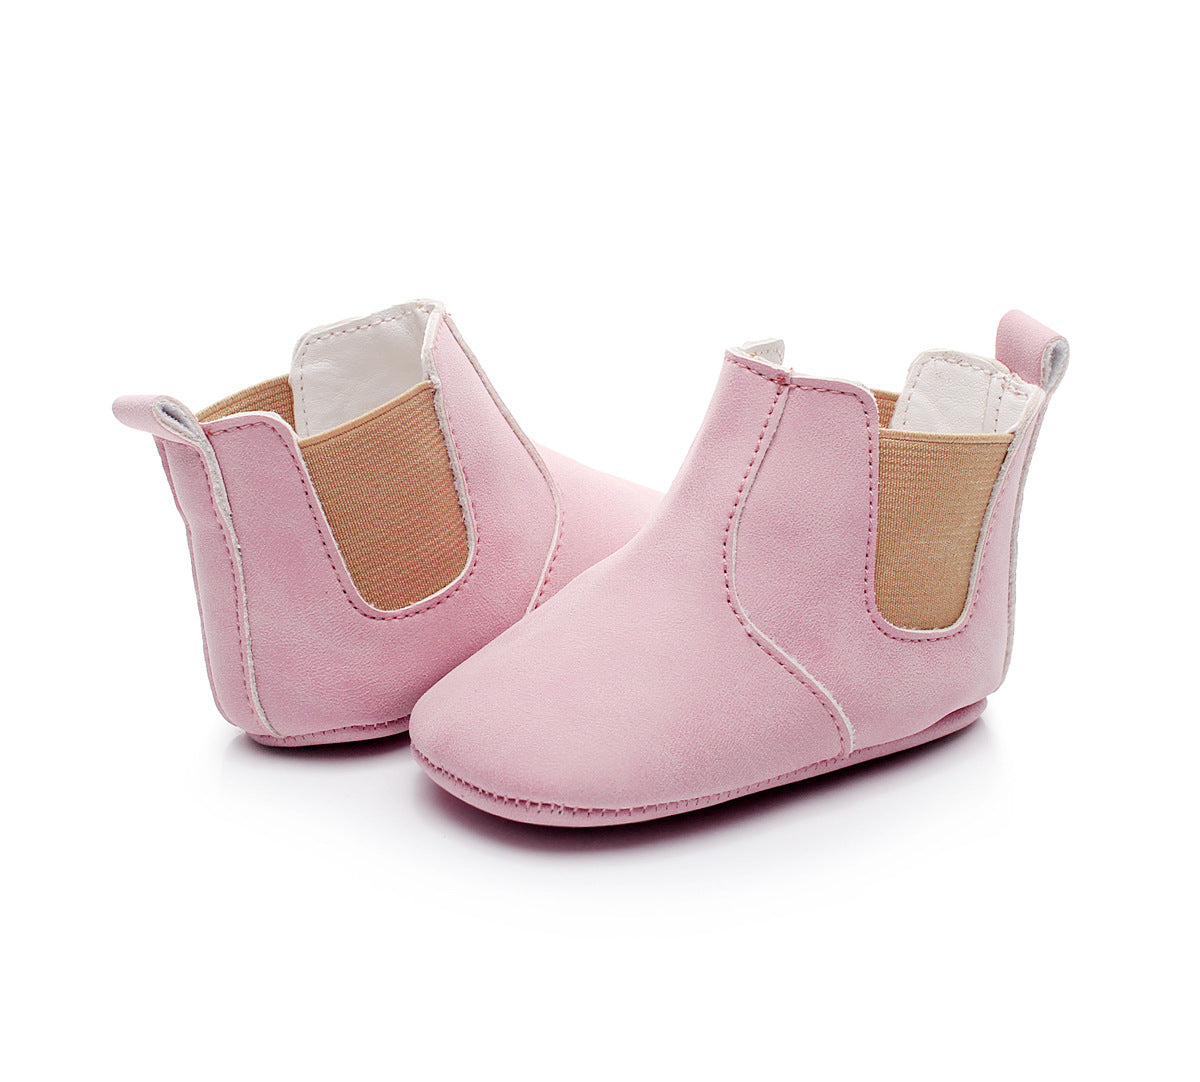 Babyschuhe Baby Xie Schuhe Kleinkindschuhe Elastische PU Weiche Schuhe Kinderschuhe